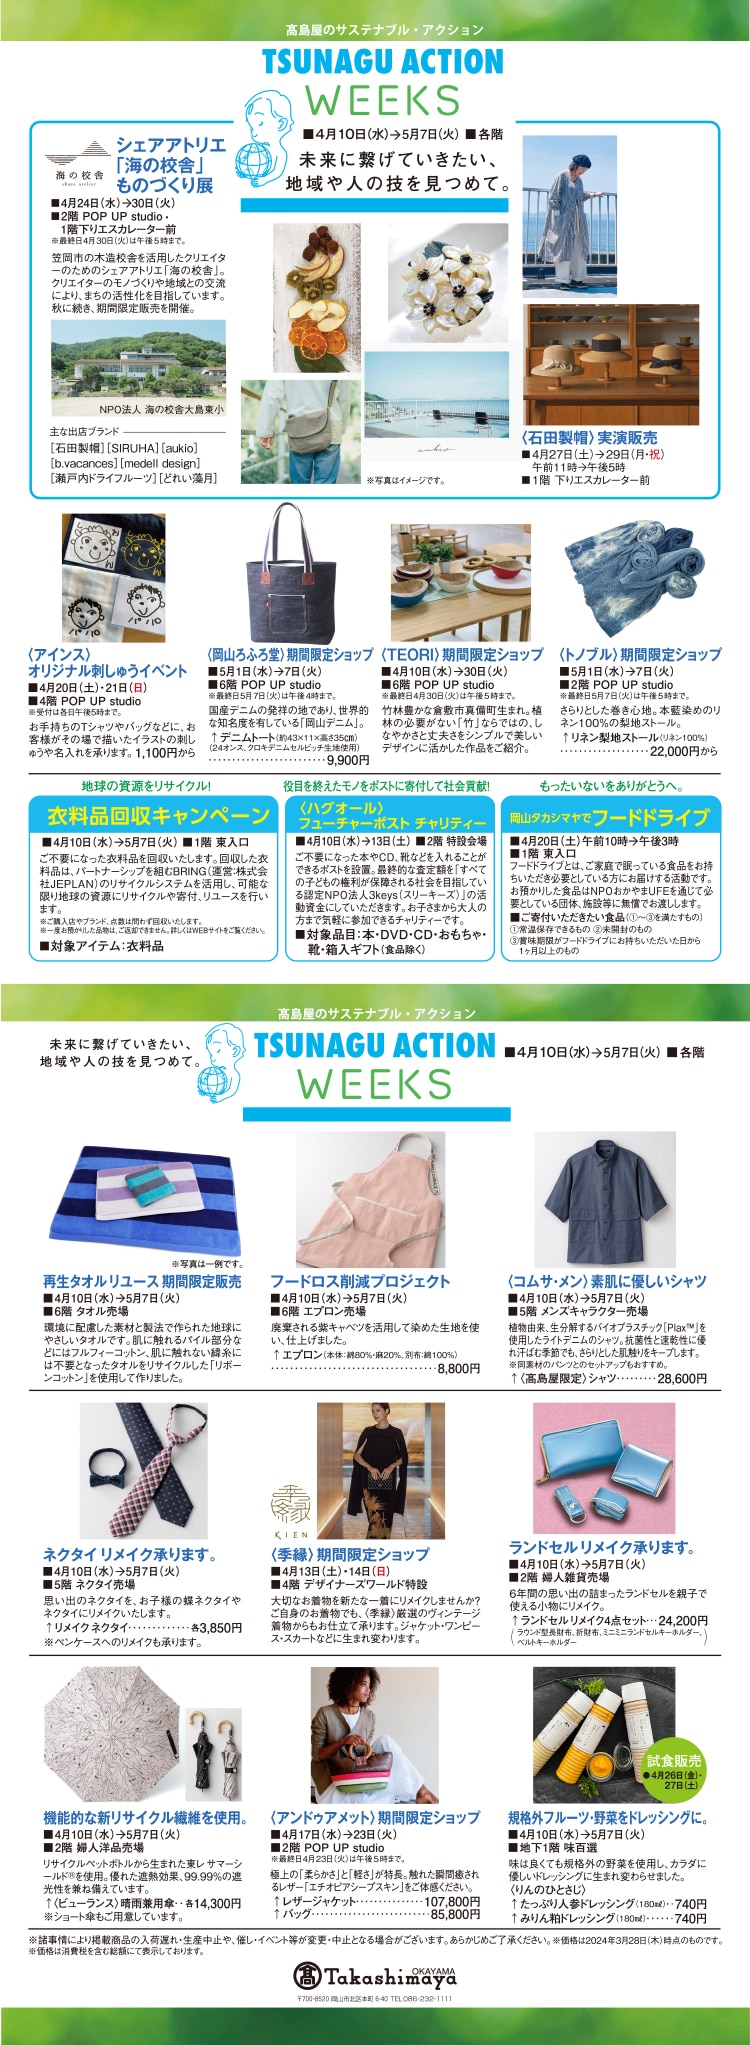 TSUNAGU ACTION WEEKS ■4月10日(水)→5月7日(火)■️各階 未来に繋げていきたい。 地域や人の技を見つめて。